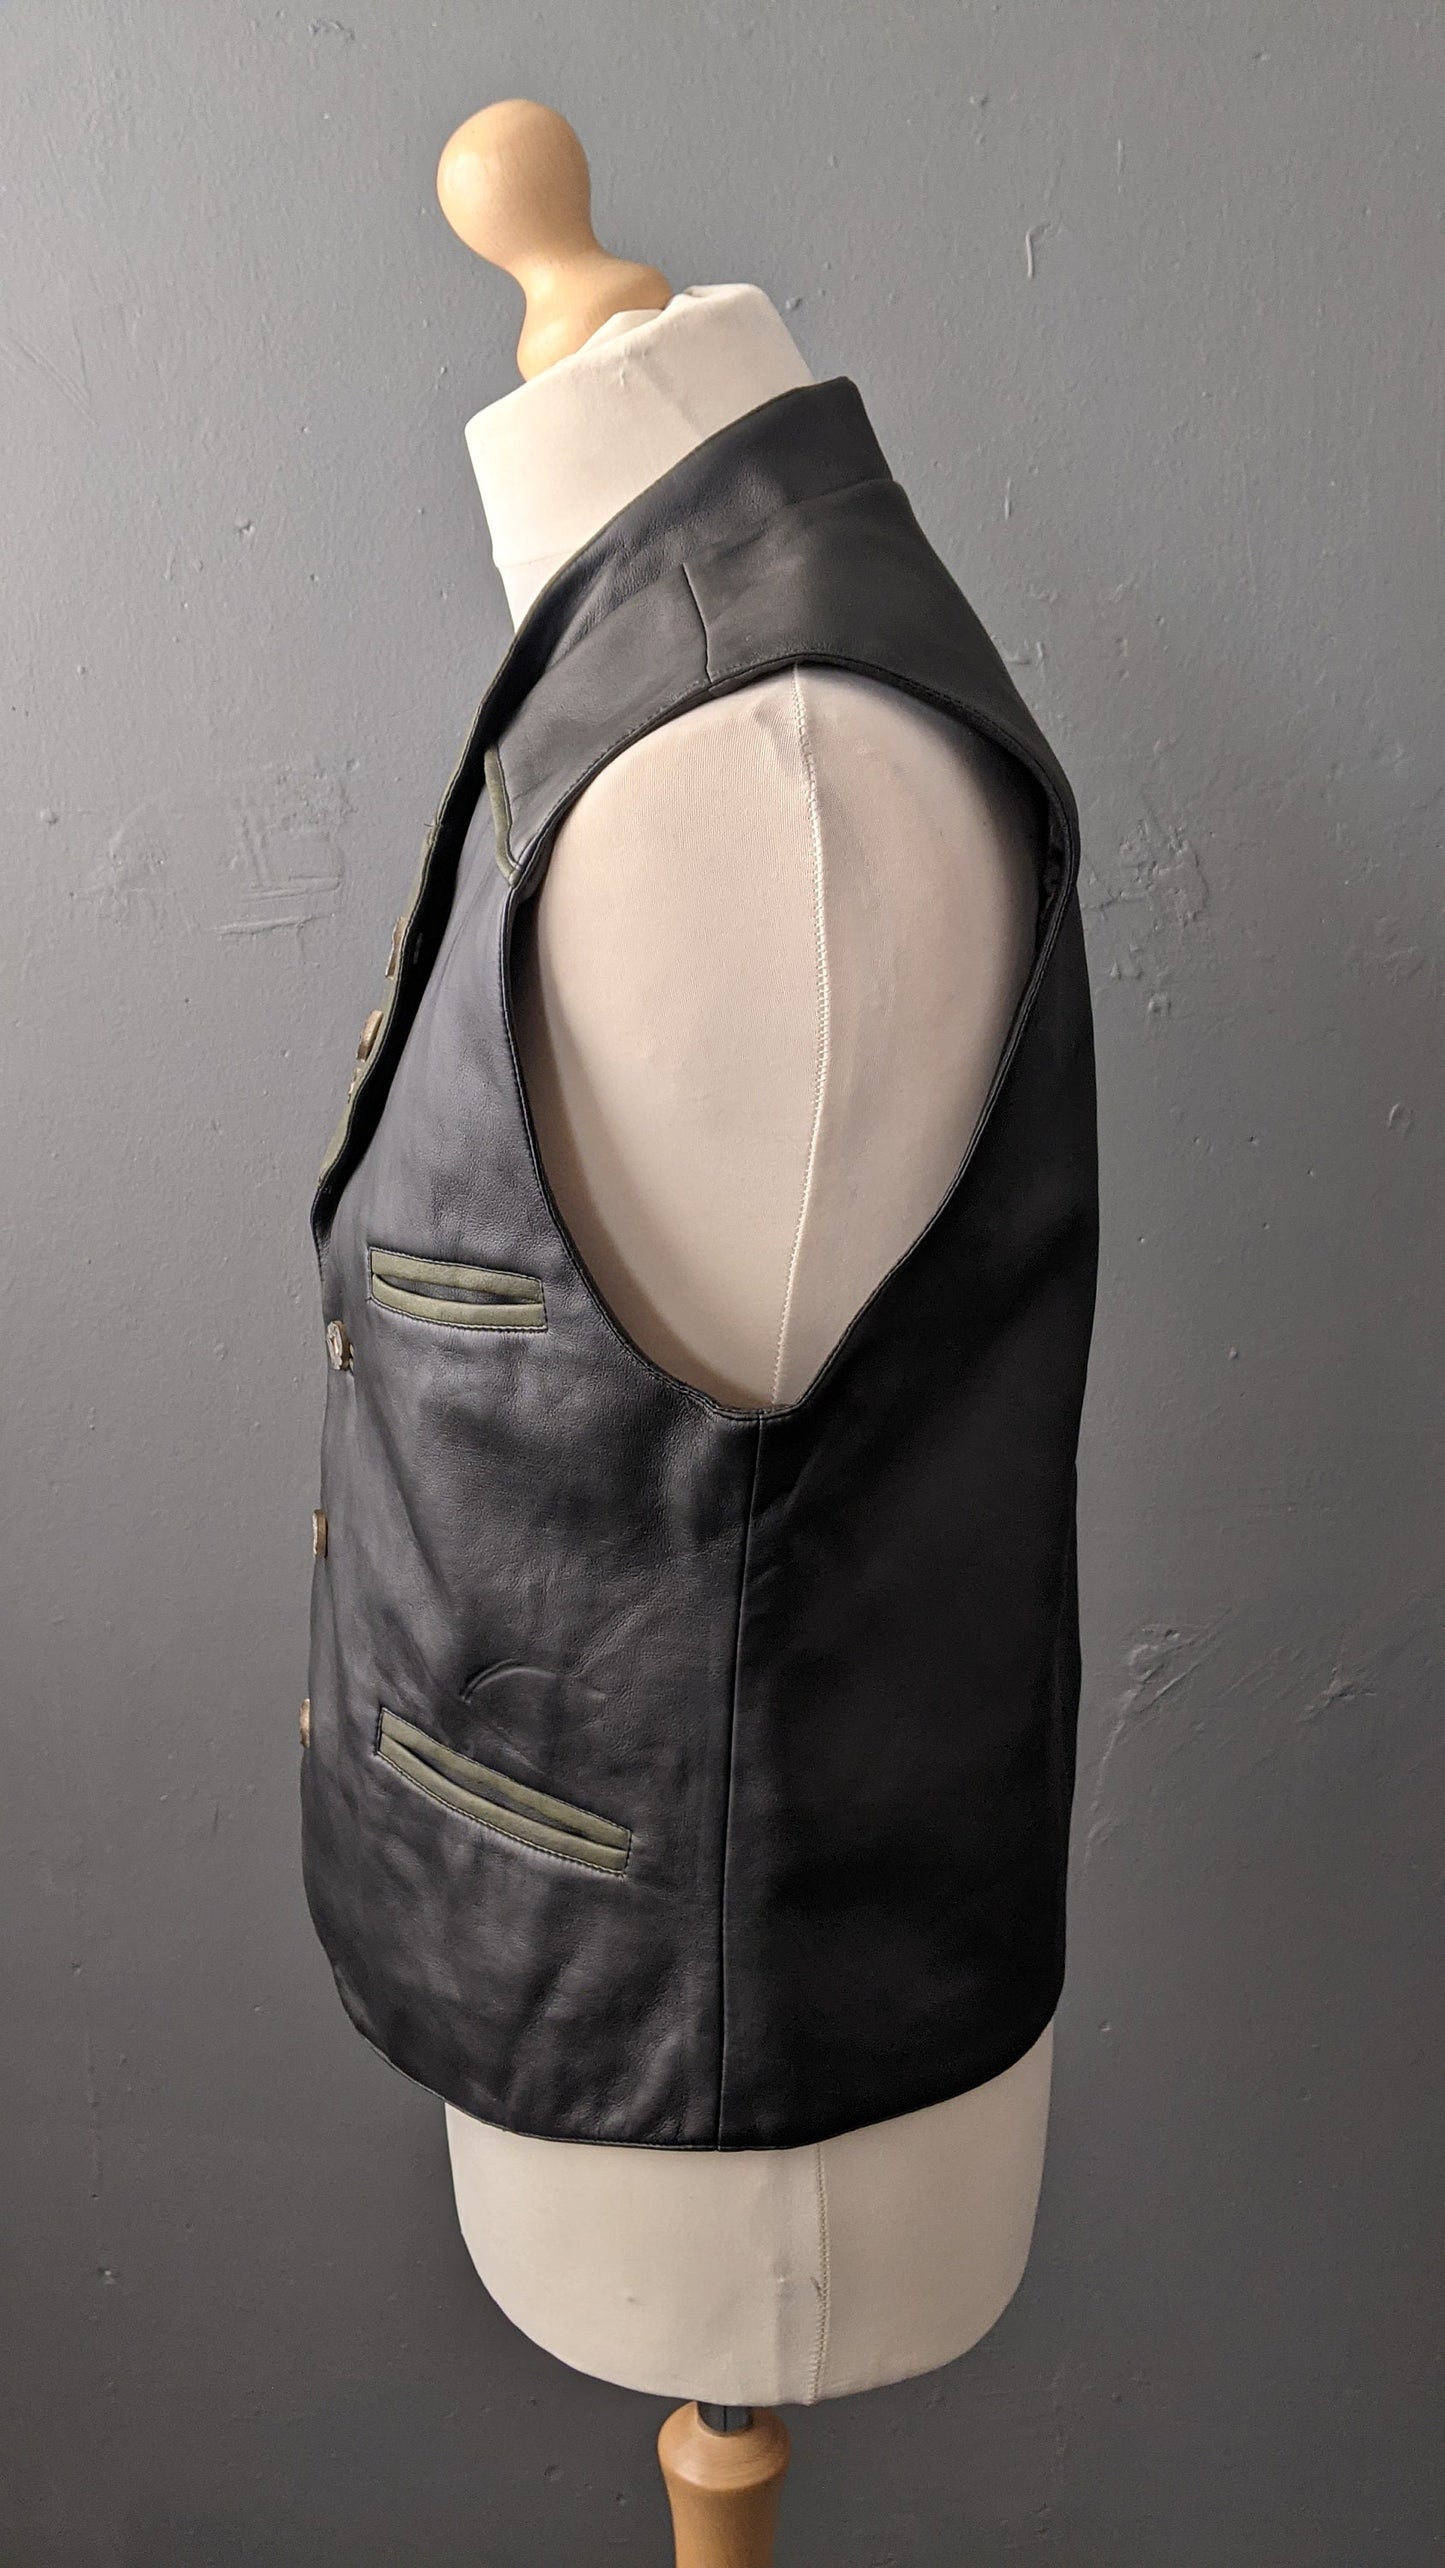 Mens Trachten Leatherette Vest, Vintage Oktoberfest Waistcoat, 42 Chest Size Medium